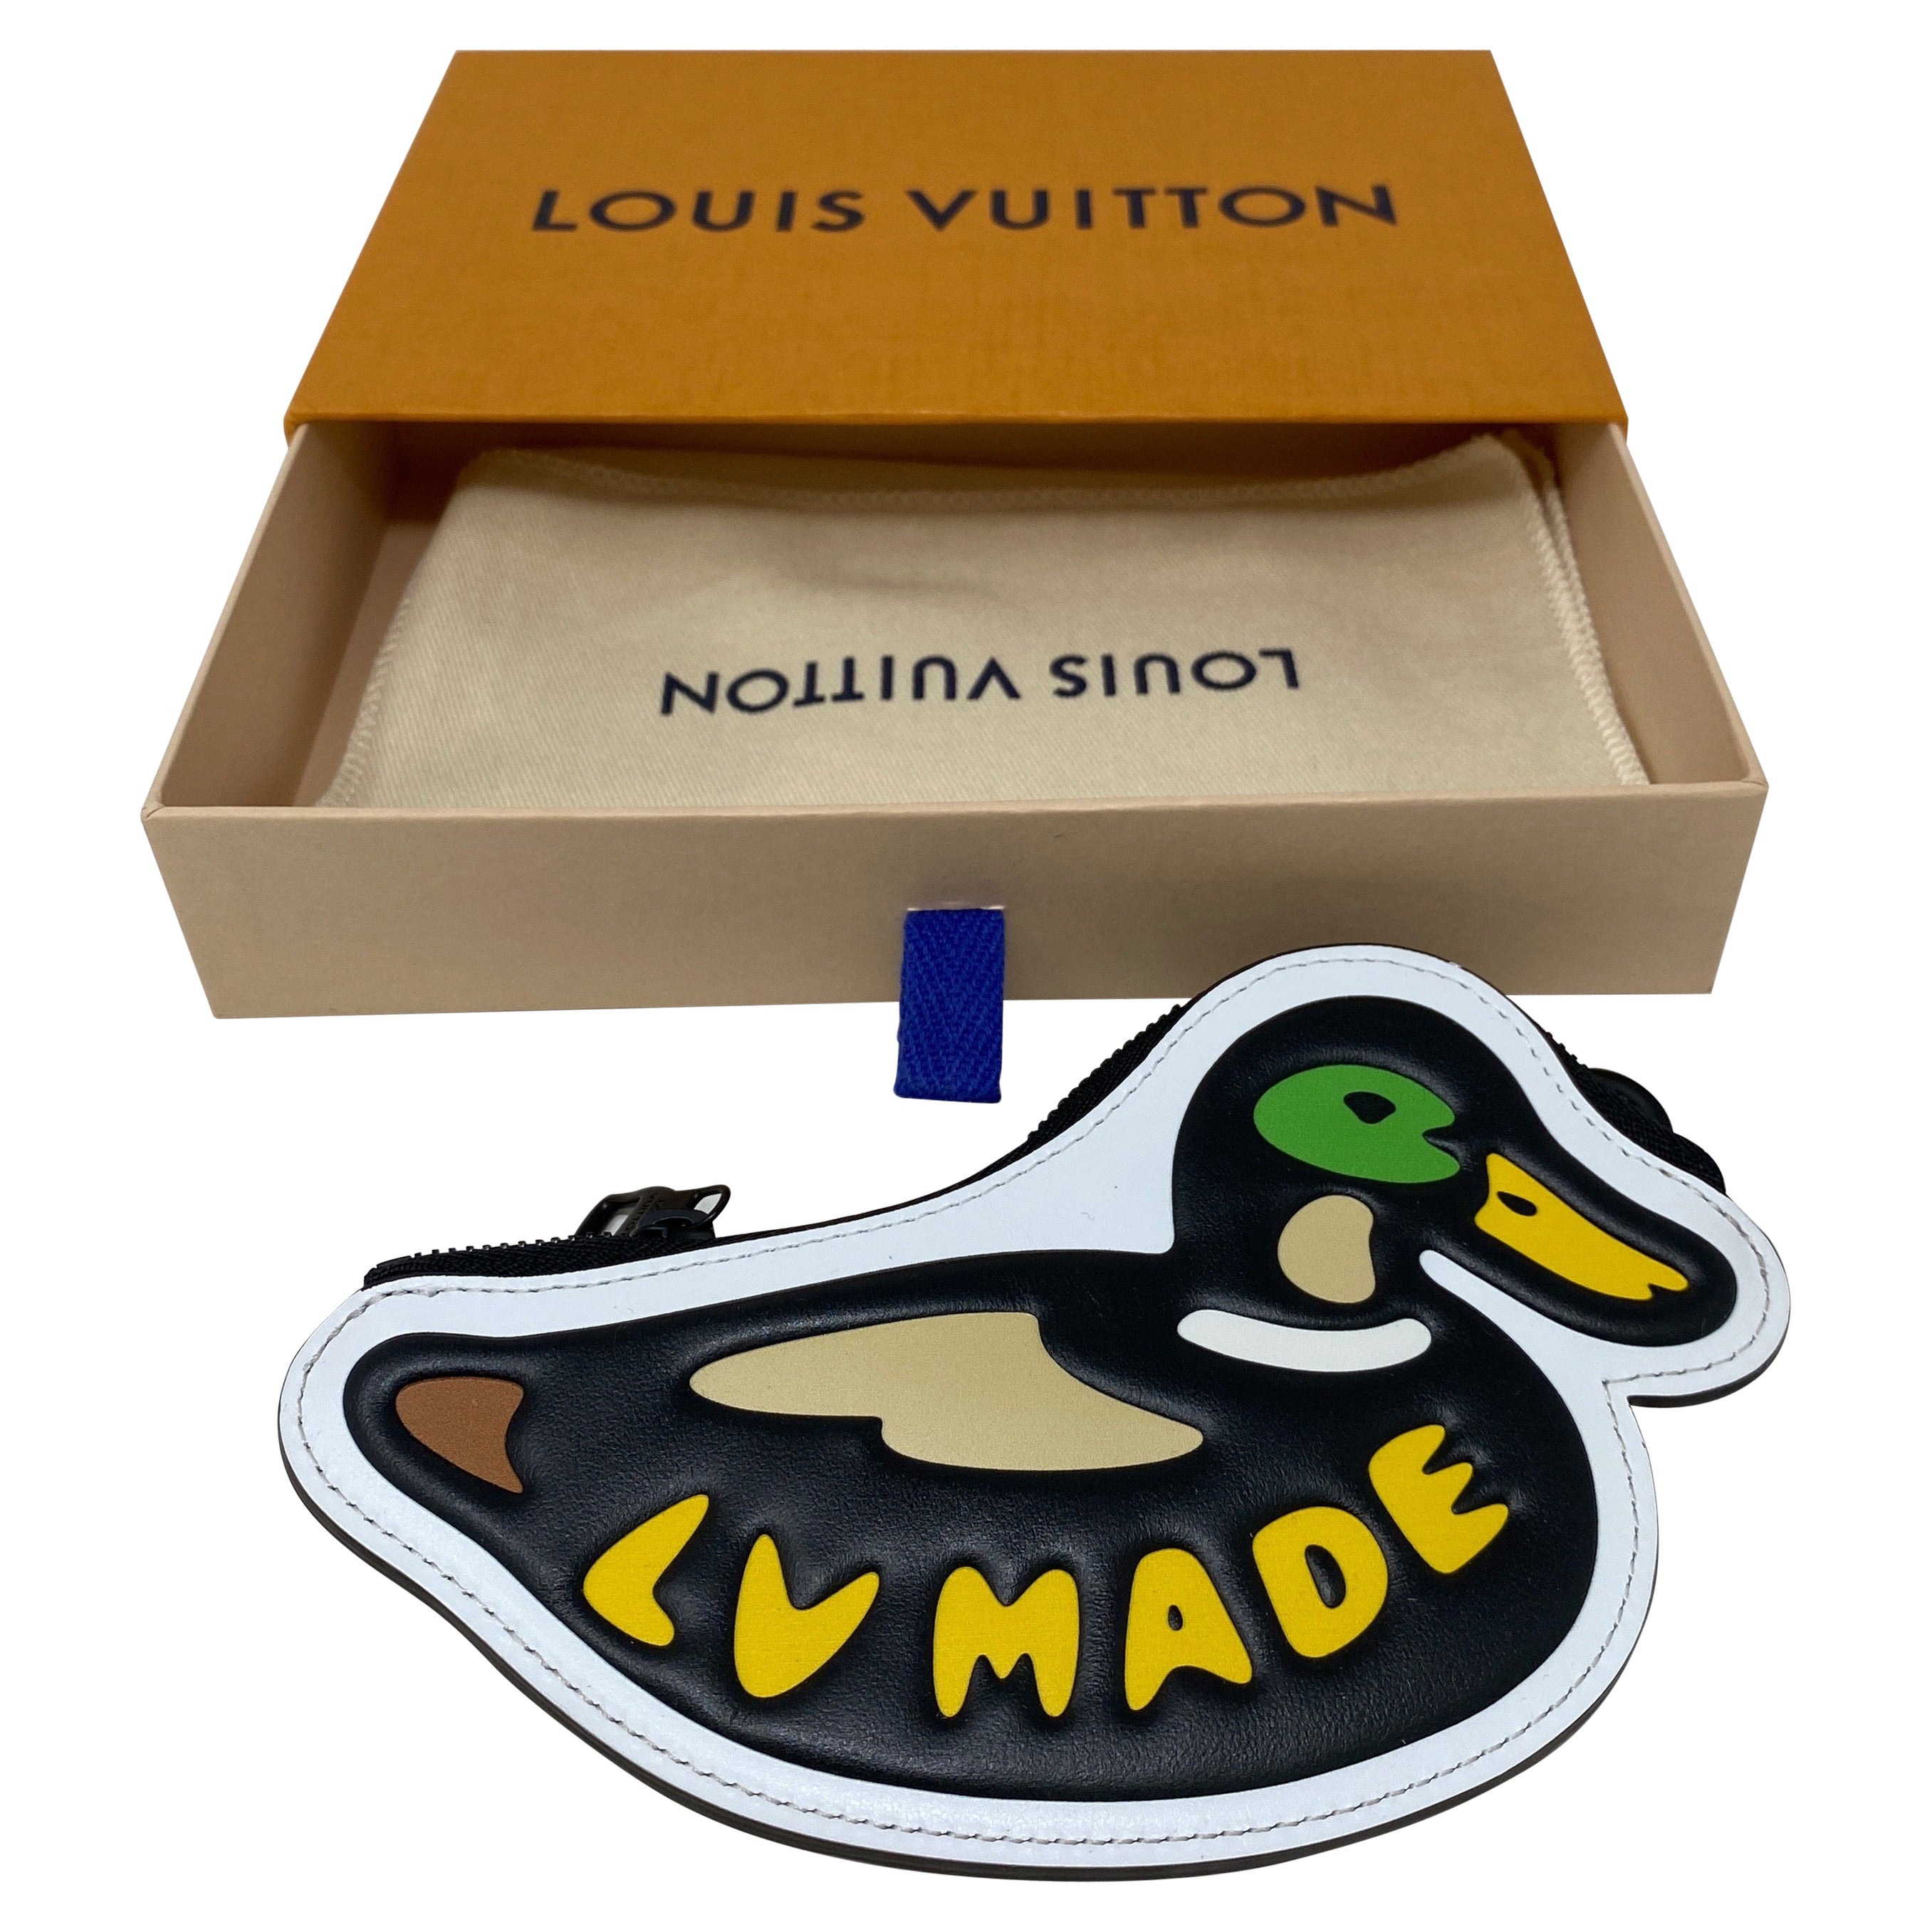 Louis Vuitton Limited Edition Pouch 